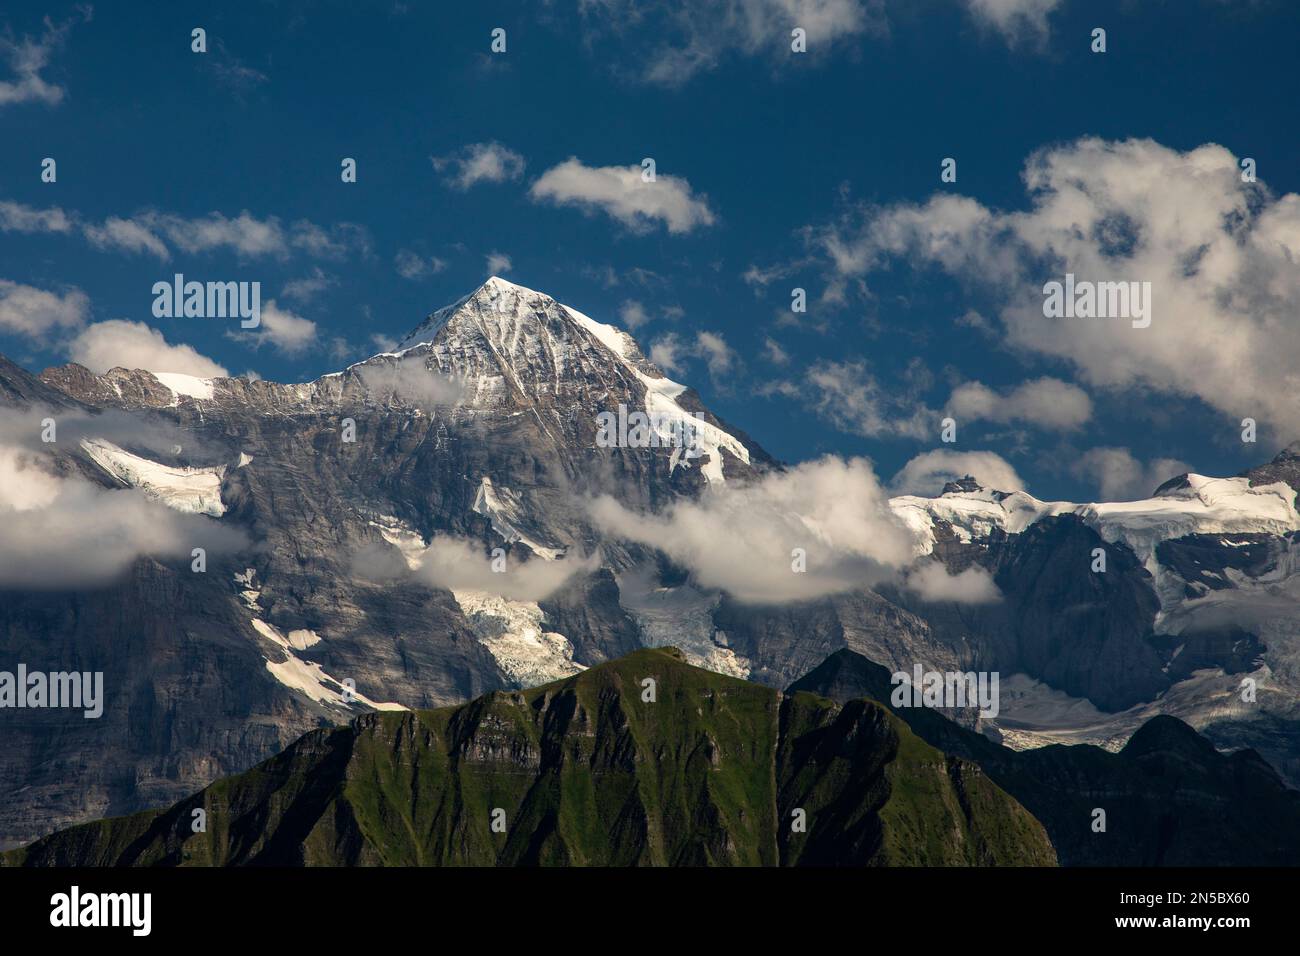 El Moench en los Alpes berneses, Suiza, Alpes berneses Foto de stock